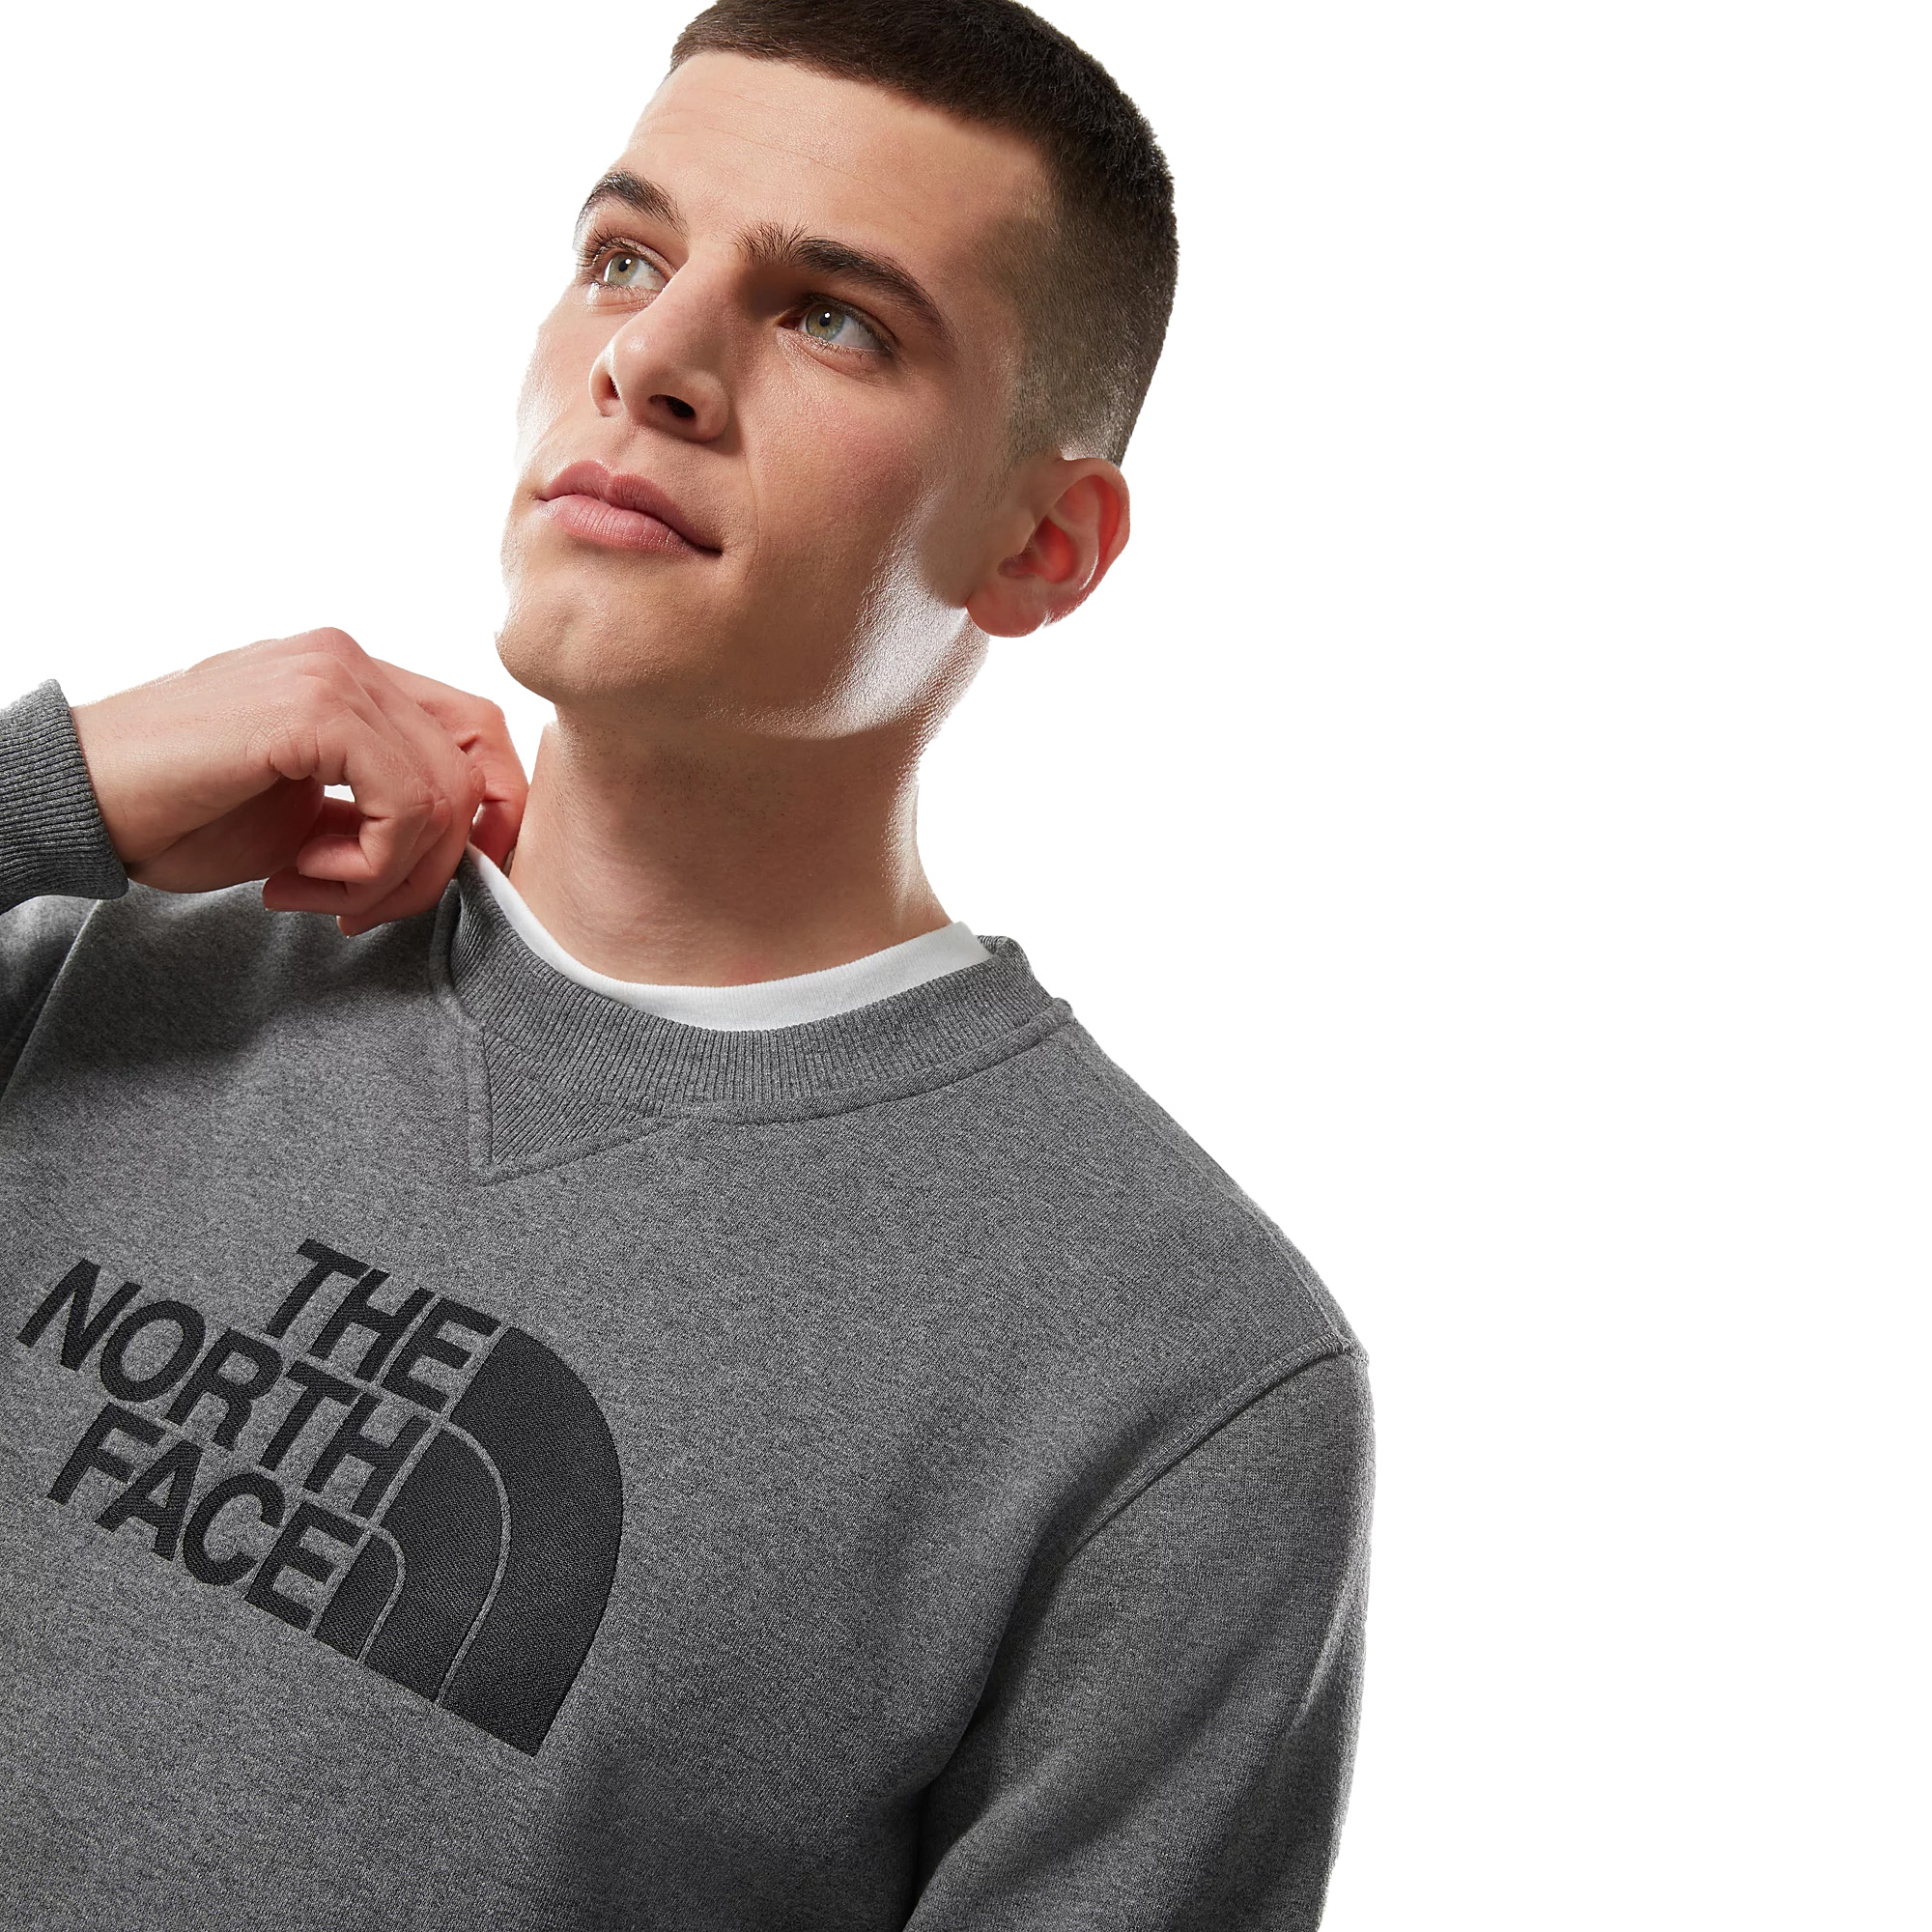 The North Face Drew Peak Crew Neck Pullover Sweater